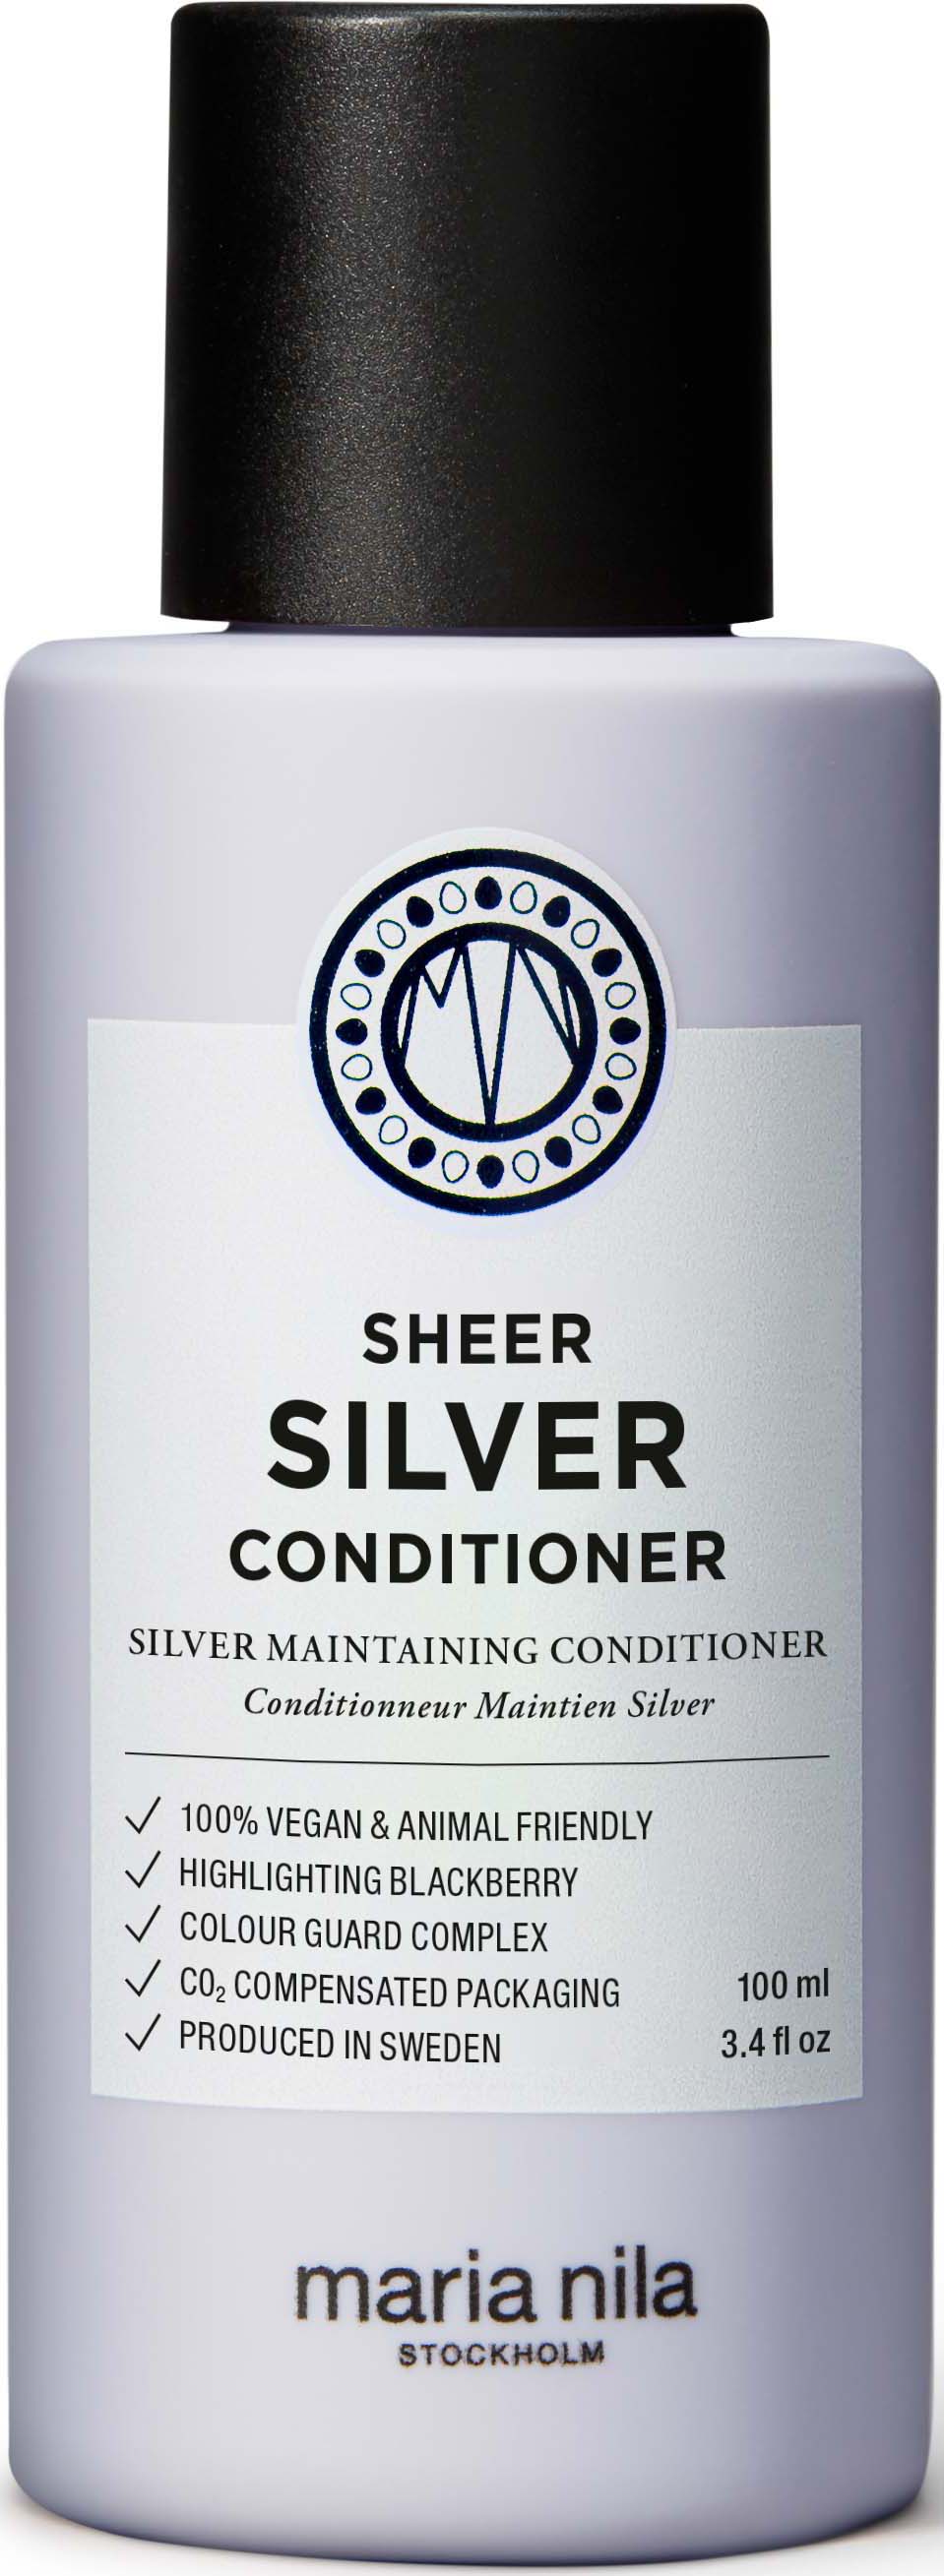 Maria Nila Palett Conditioner Sheer Silver 100ml